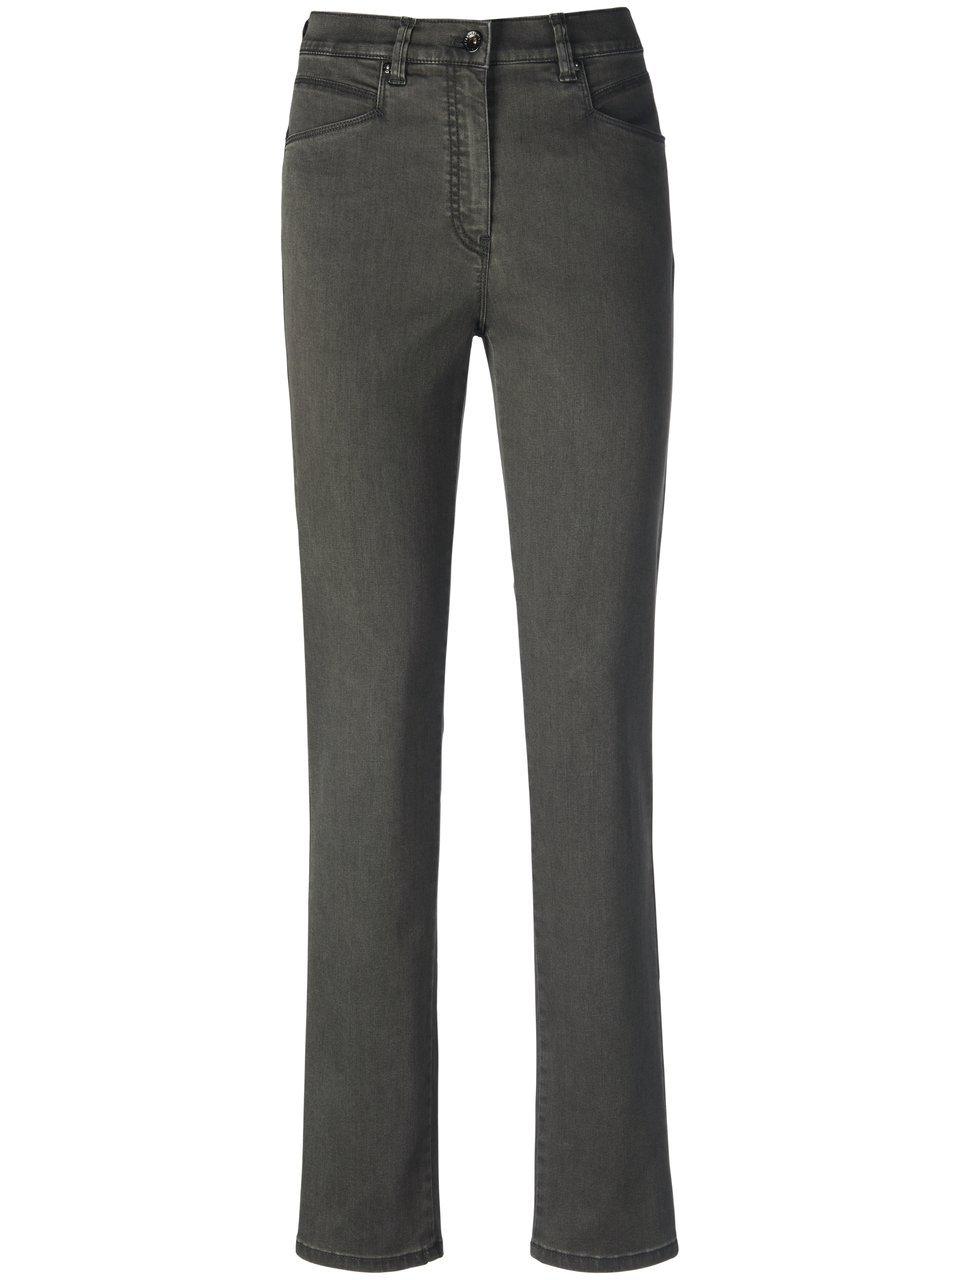 Corrigerende ProForm S Super Slim-jeans model Lea Van Raphaela by Brax denim